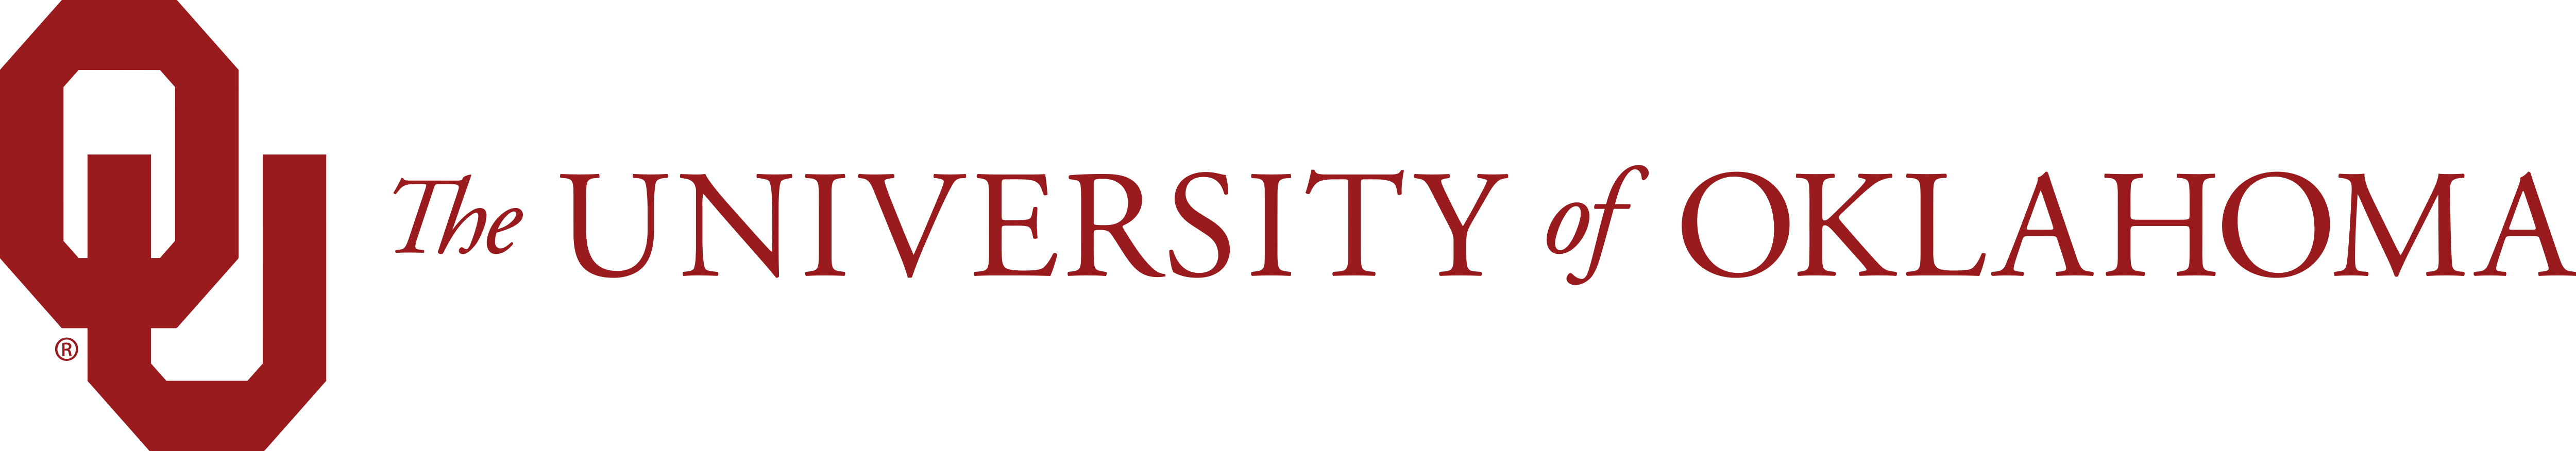 University компания. Uni организация. Uni of Oklahoma. Издательство Азбука логотип PNG. Company university